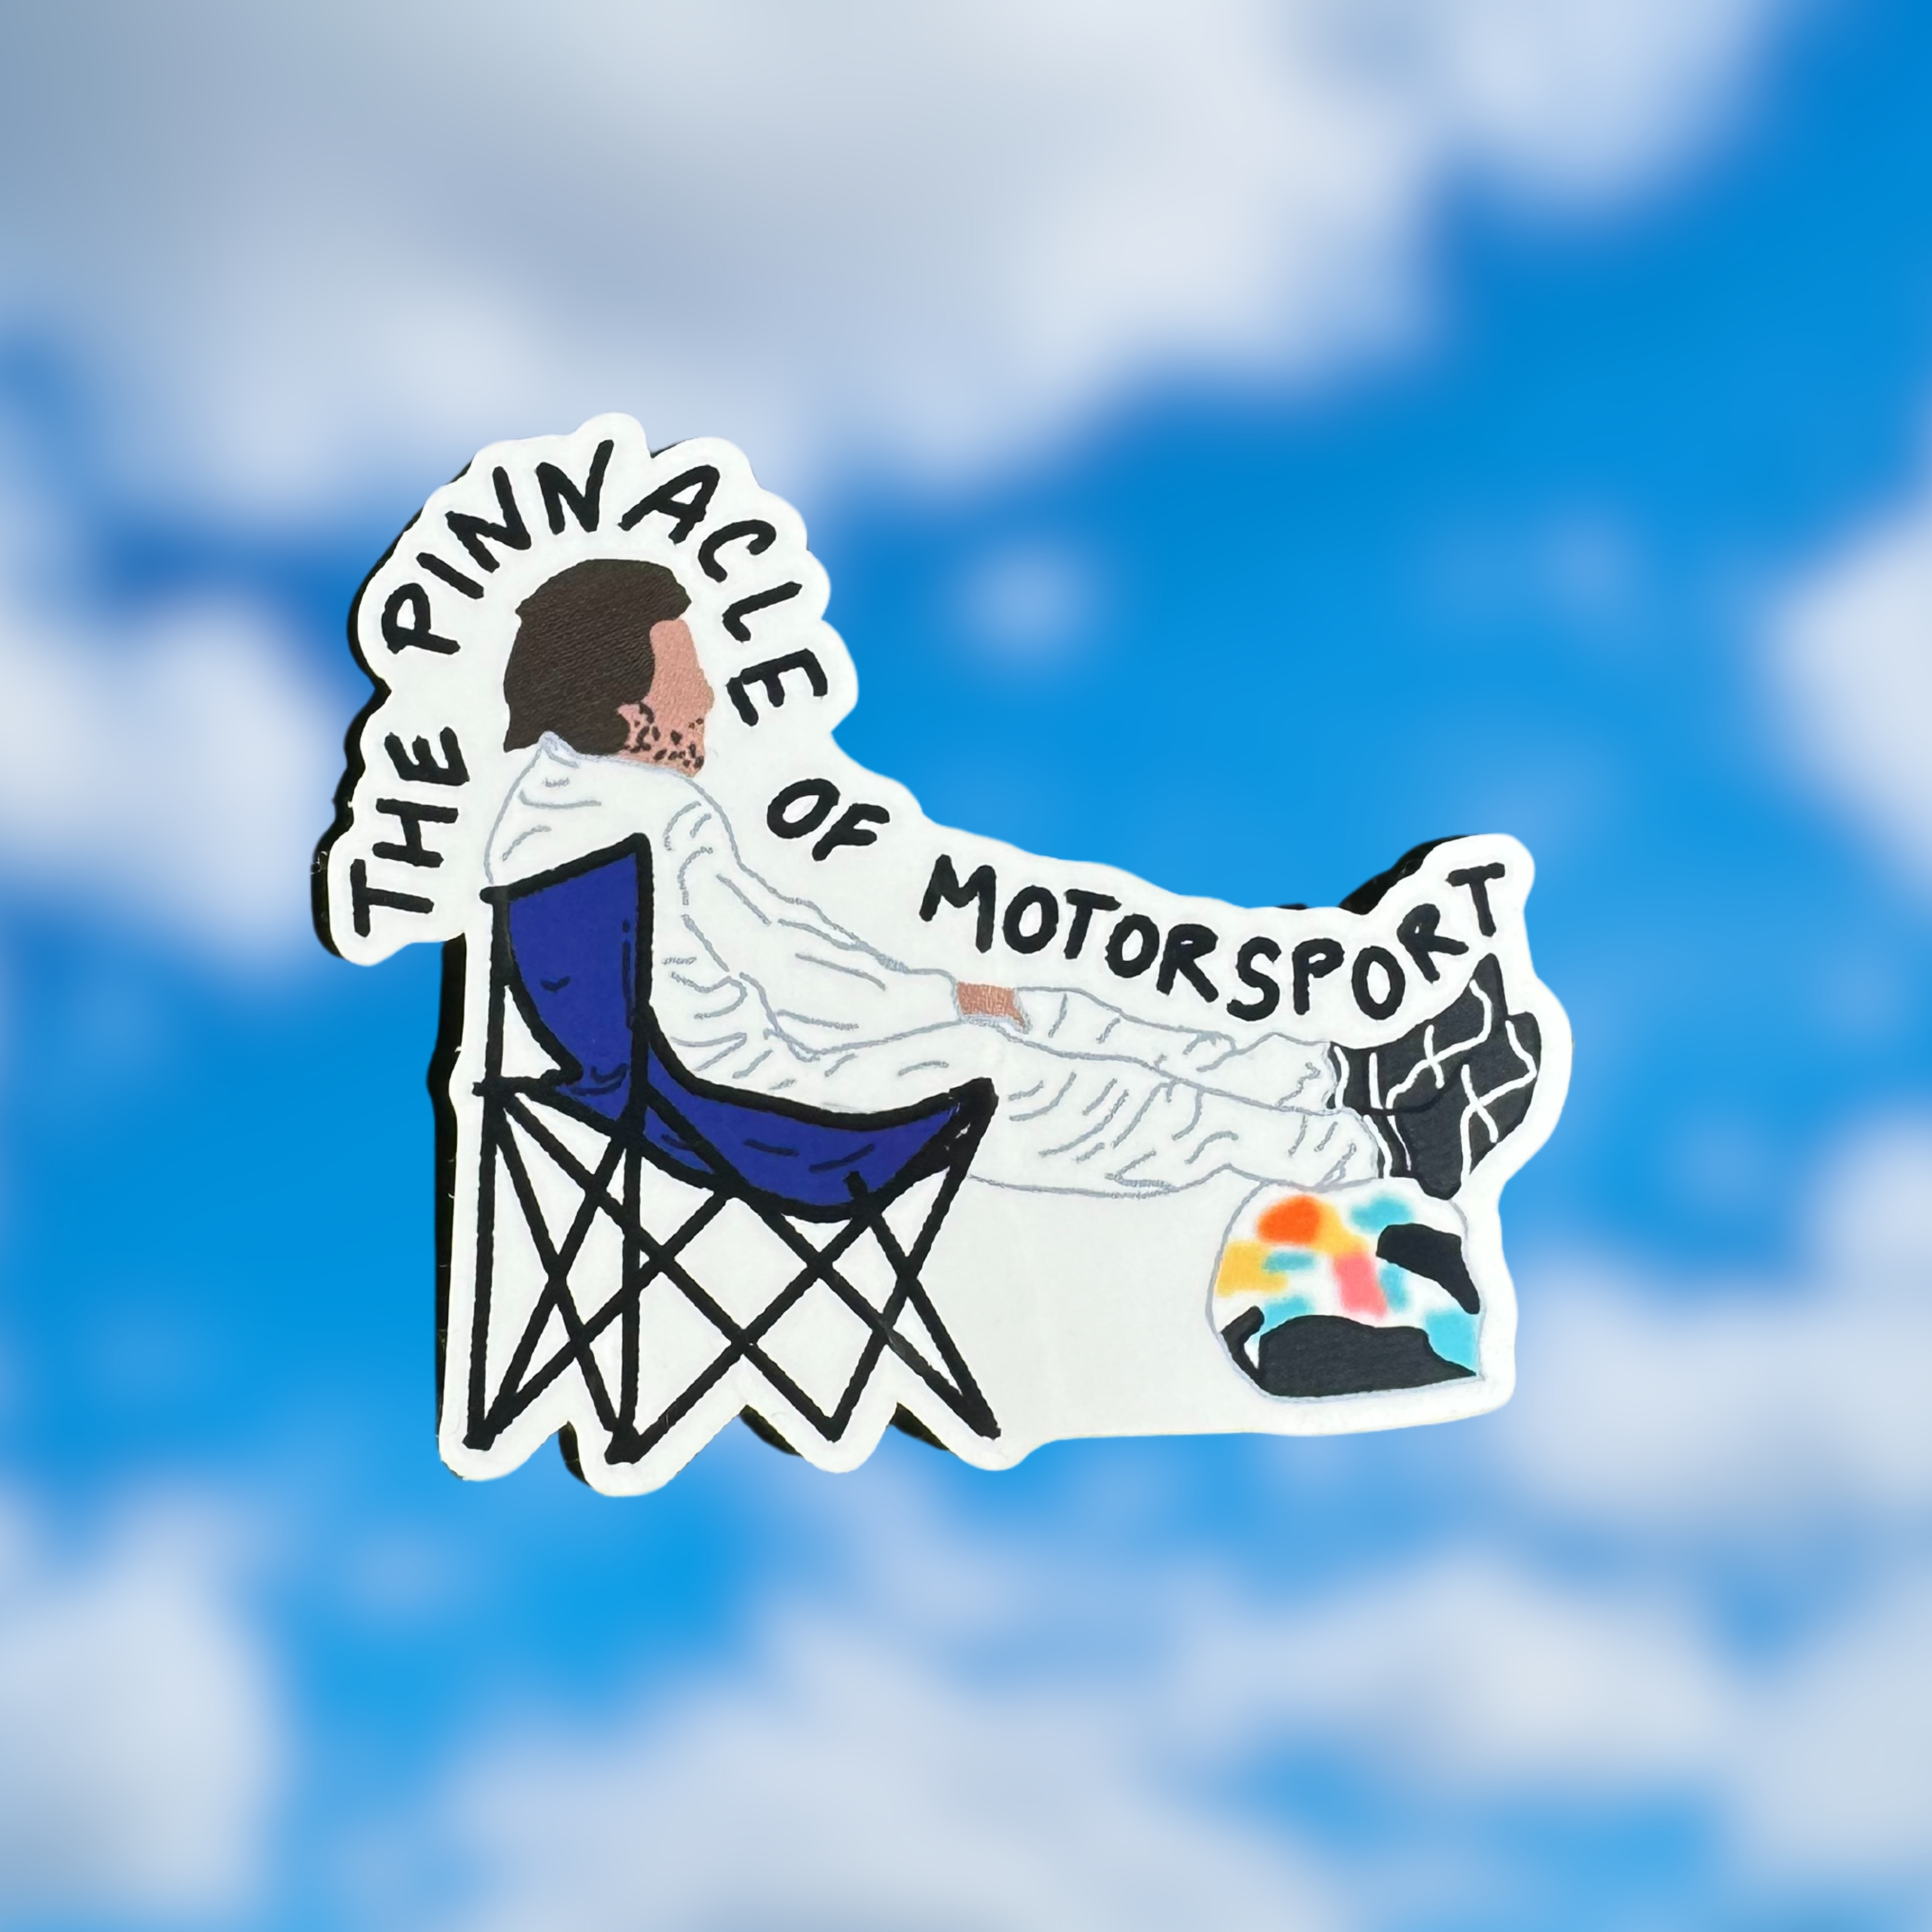 Fernando Alonso "Pinnacle of Motorsport" chair sticker